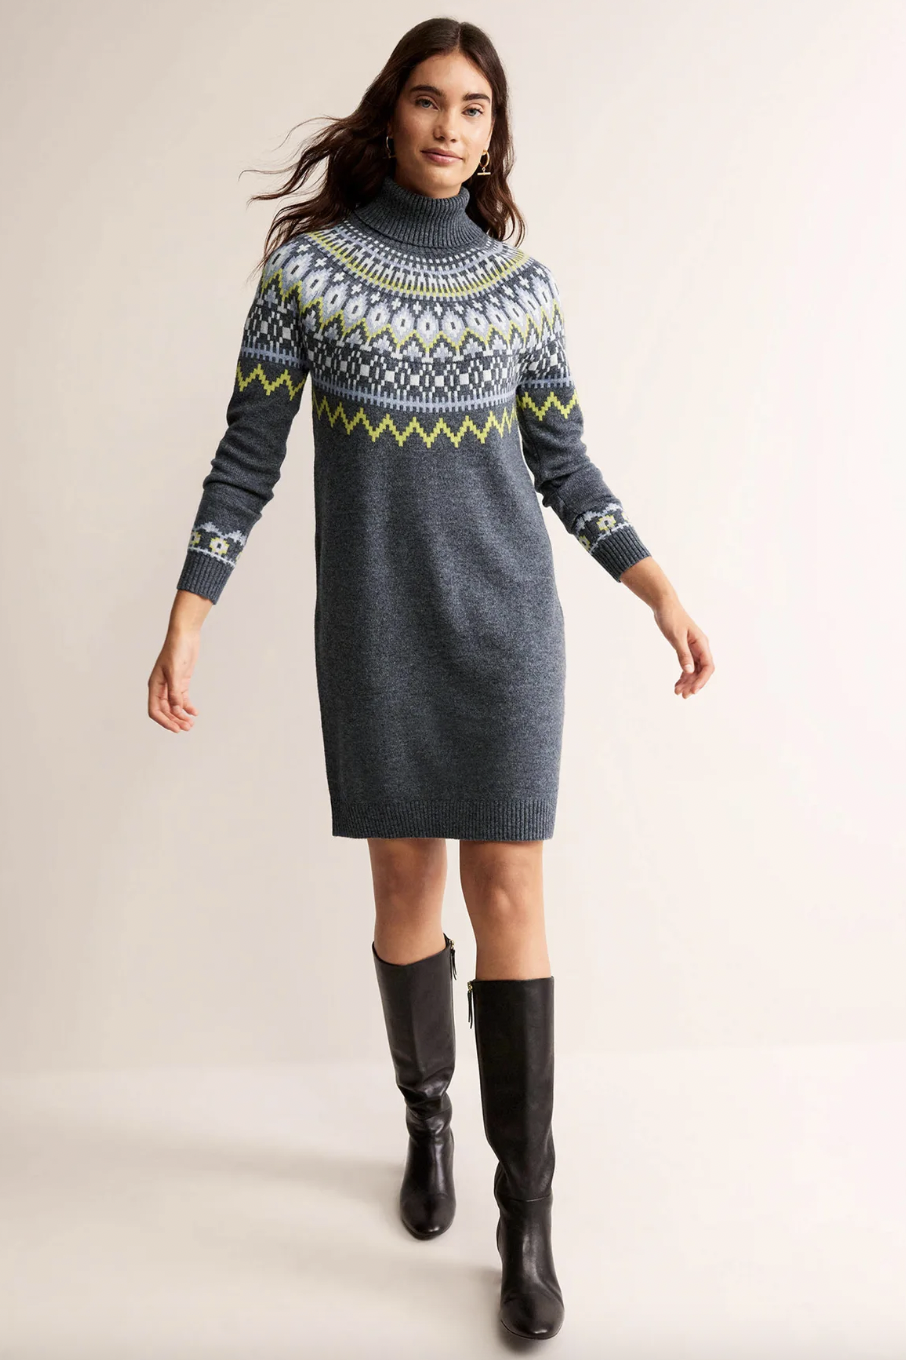 Jumper Dresses, Knitted & Sweater Dresses